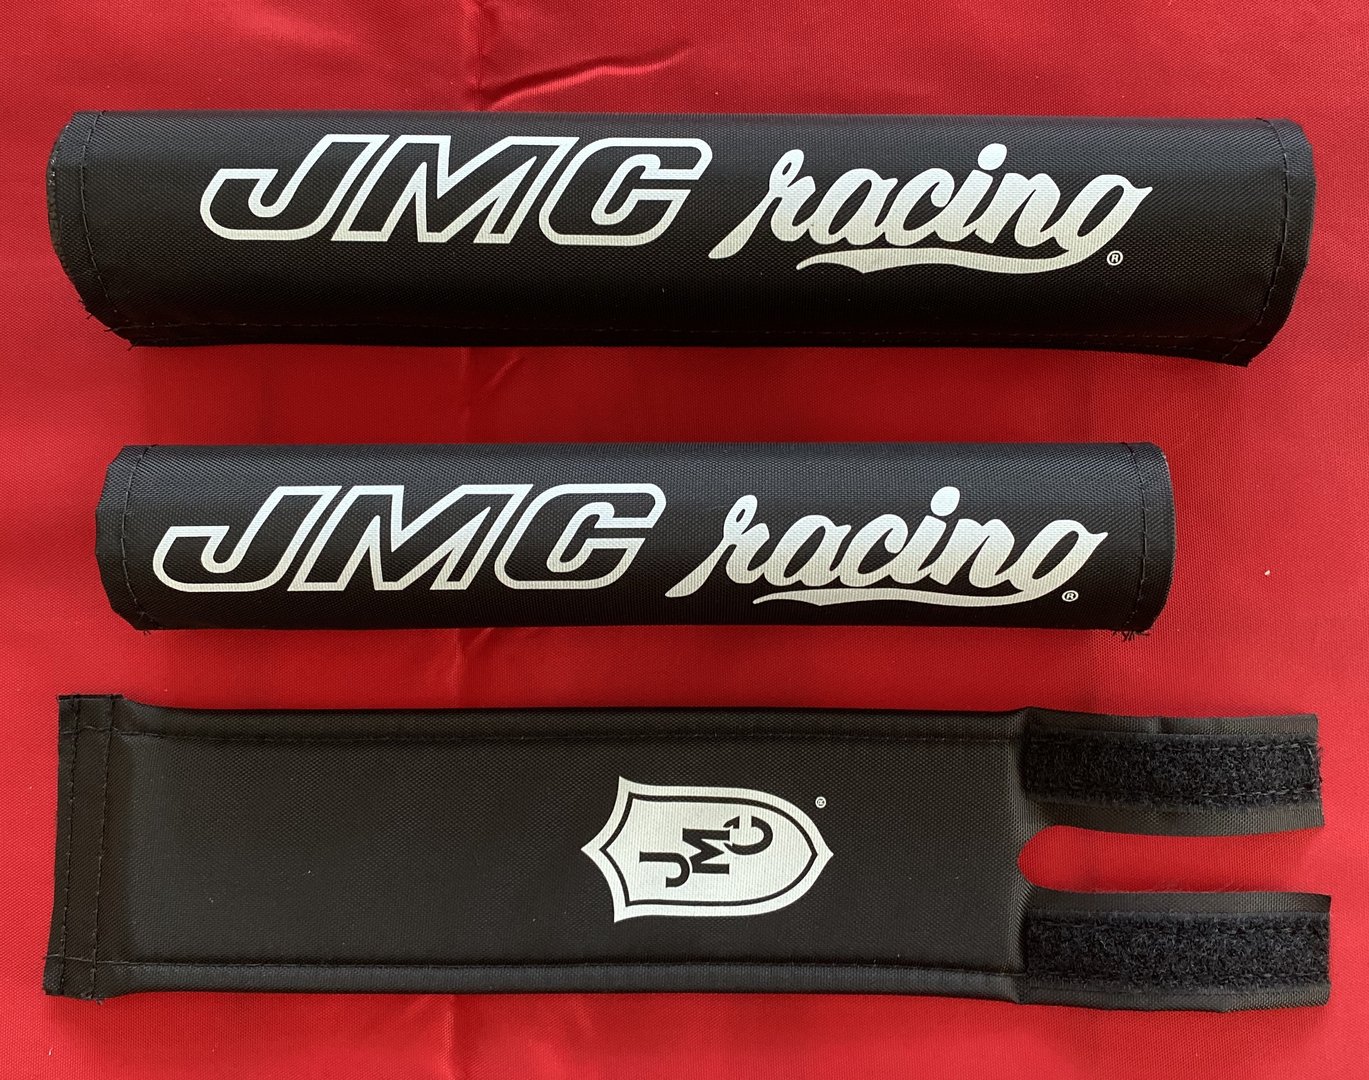 Gastheer van Afgeschaft operatie Black 1st Generation JMC® Racing Pad set - JMC BMX